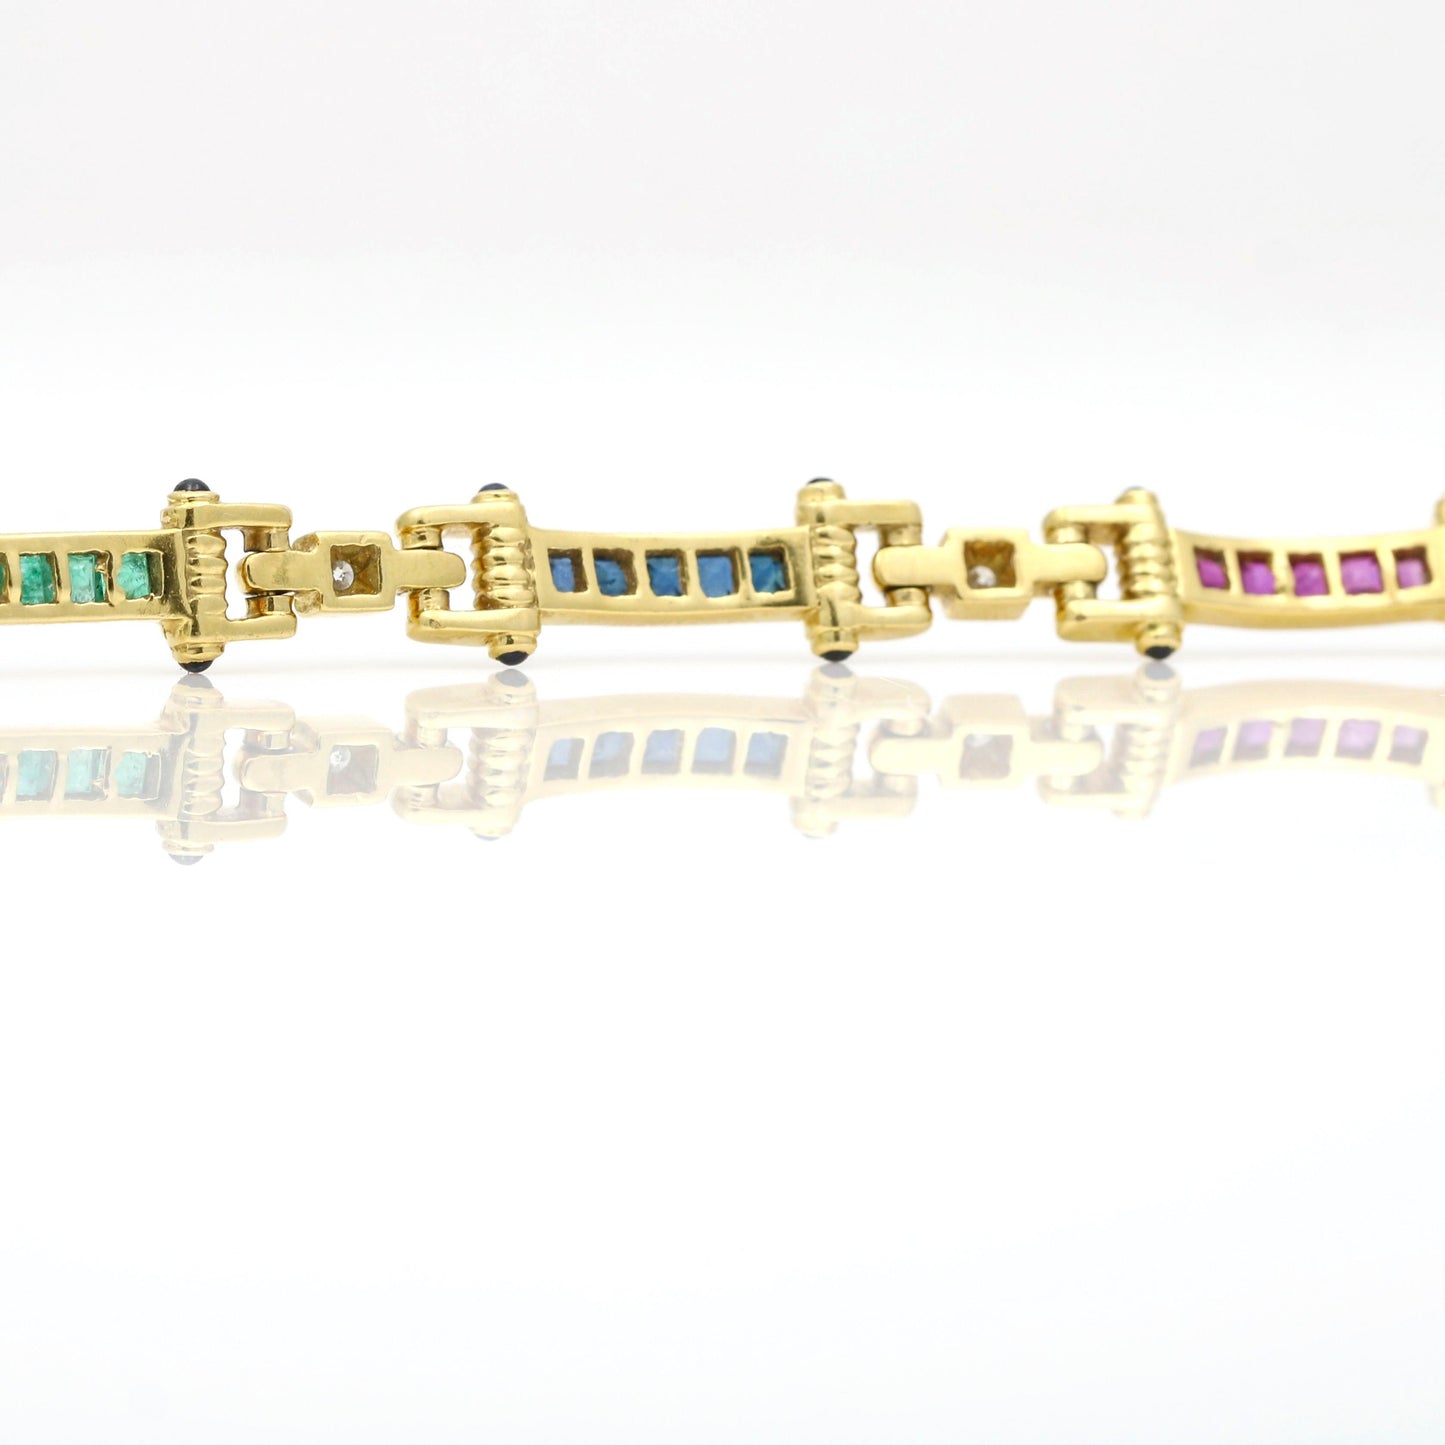 VIntage Diamond Emerald Sapphire Ruby Link Bracelet in 18k Yellow Gold - 31 Jewels Inc.